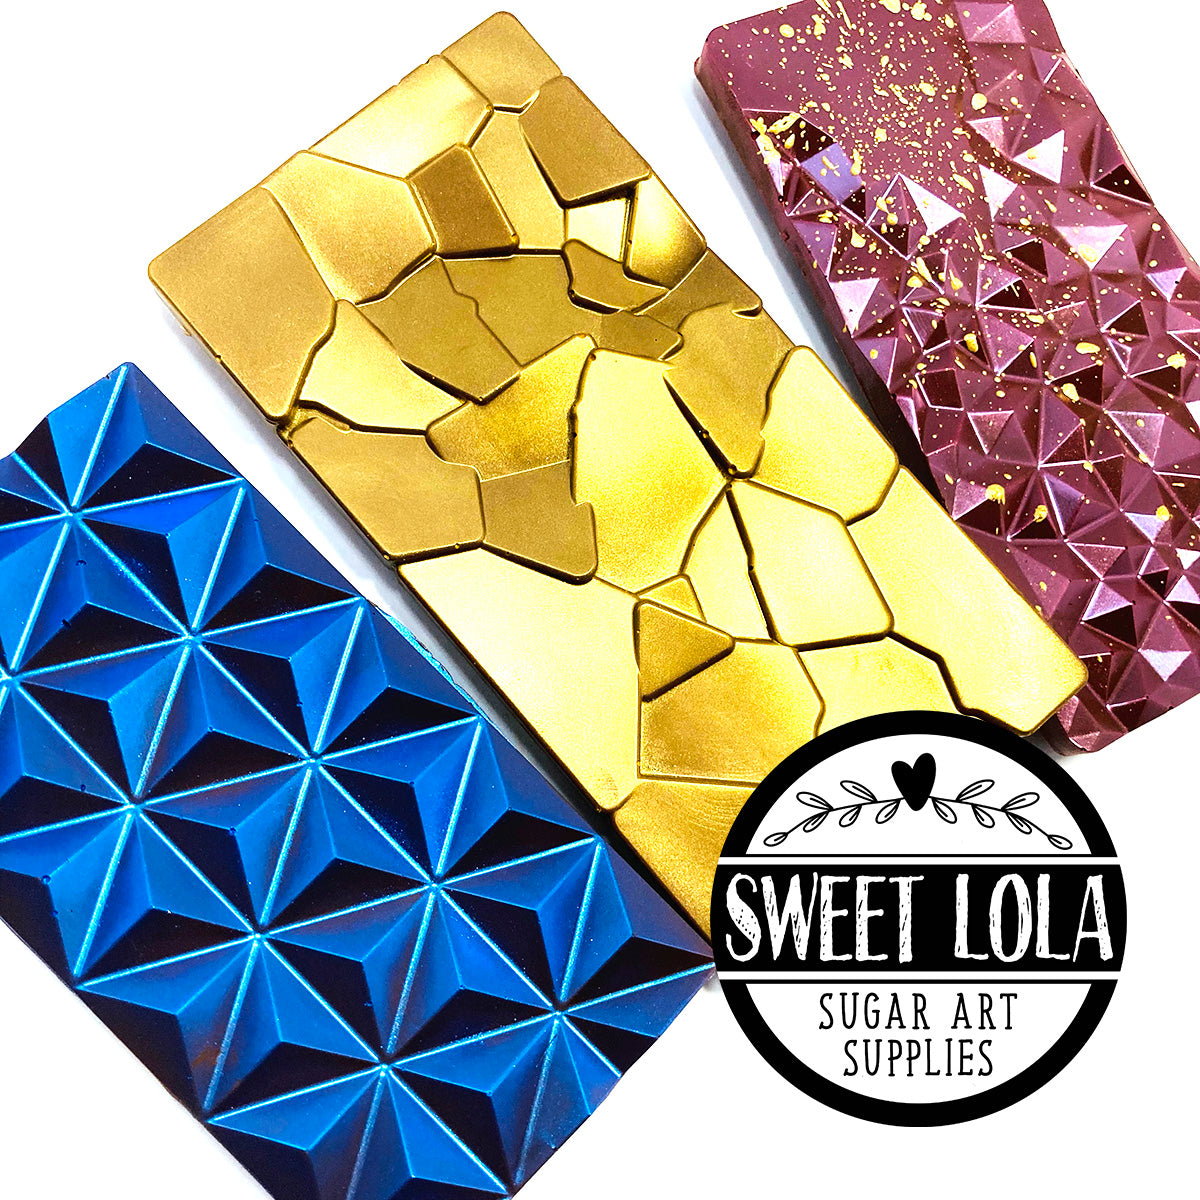 Edible luster dust - Sweet Lola – Sweet Lola Sugar Art Supplies